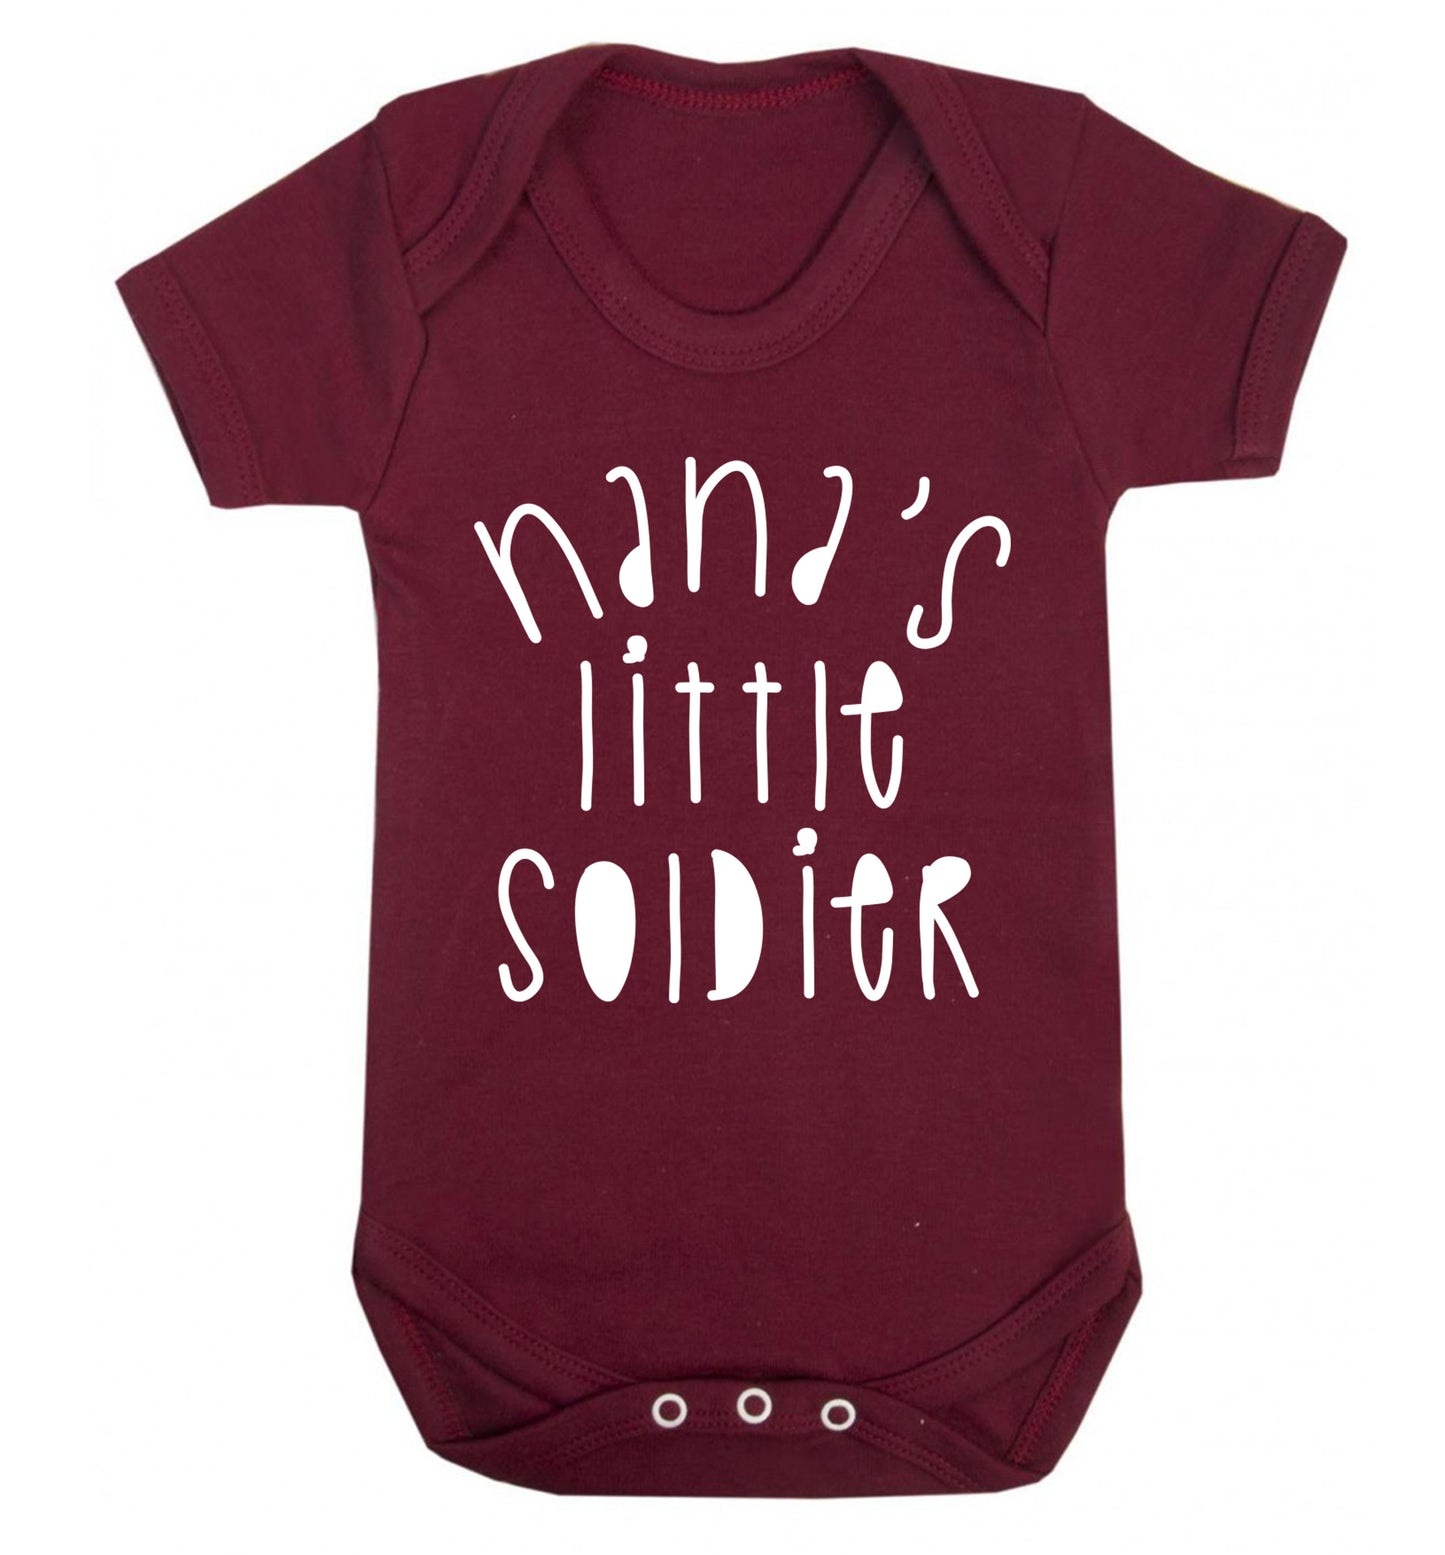 Nana's little soldier Baby Vest maroon 18-24 months